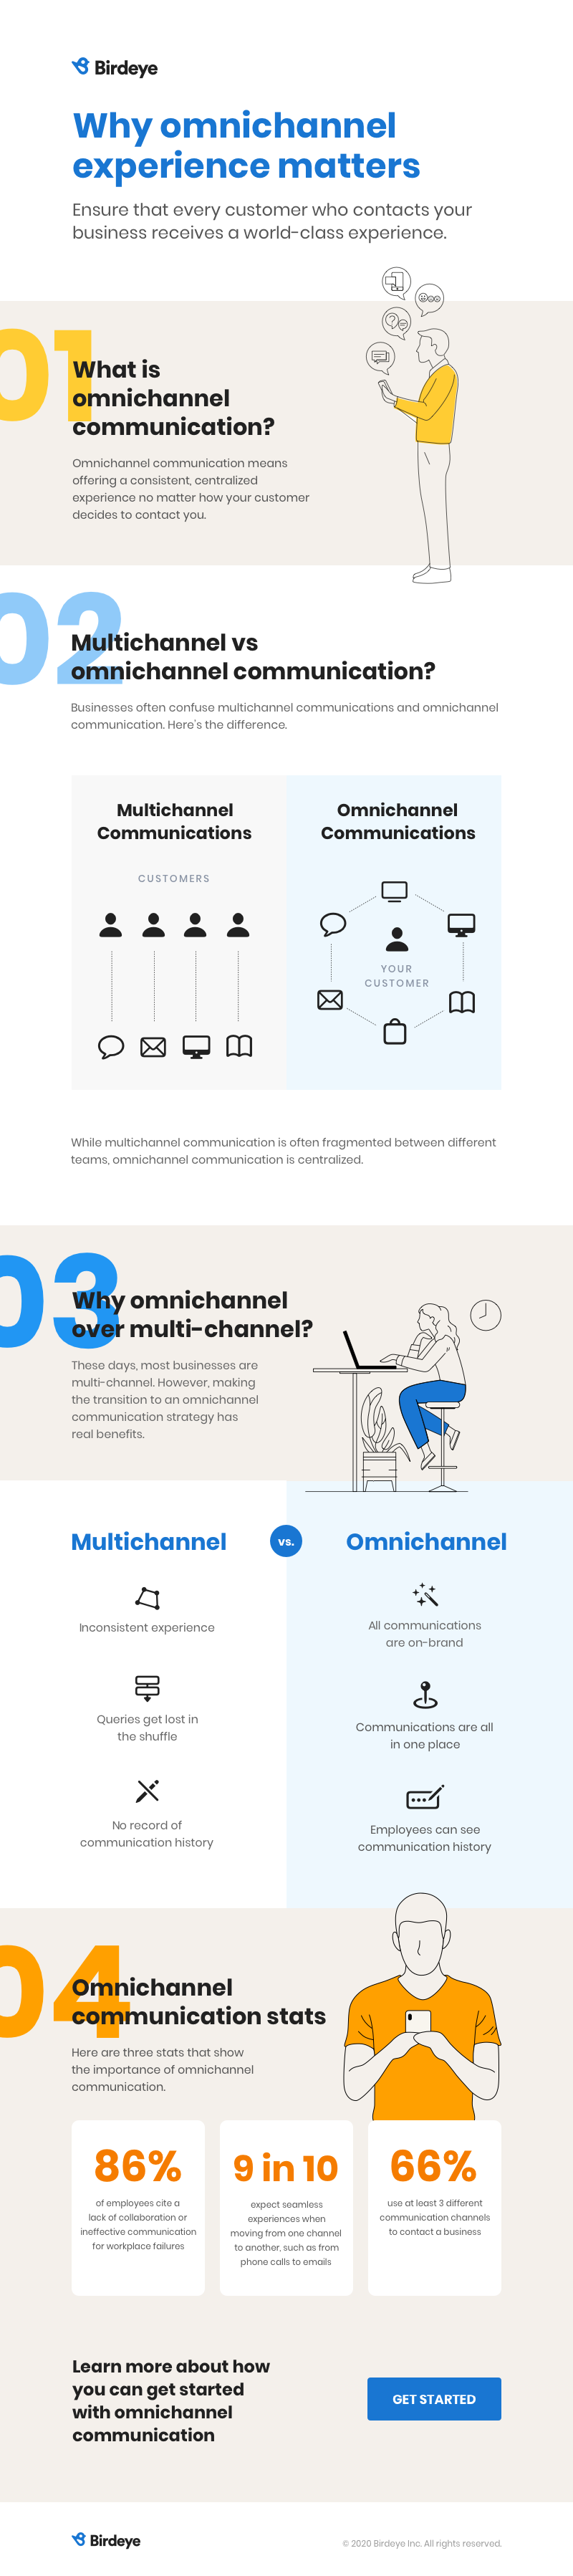 omnichannel communication infographic